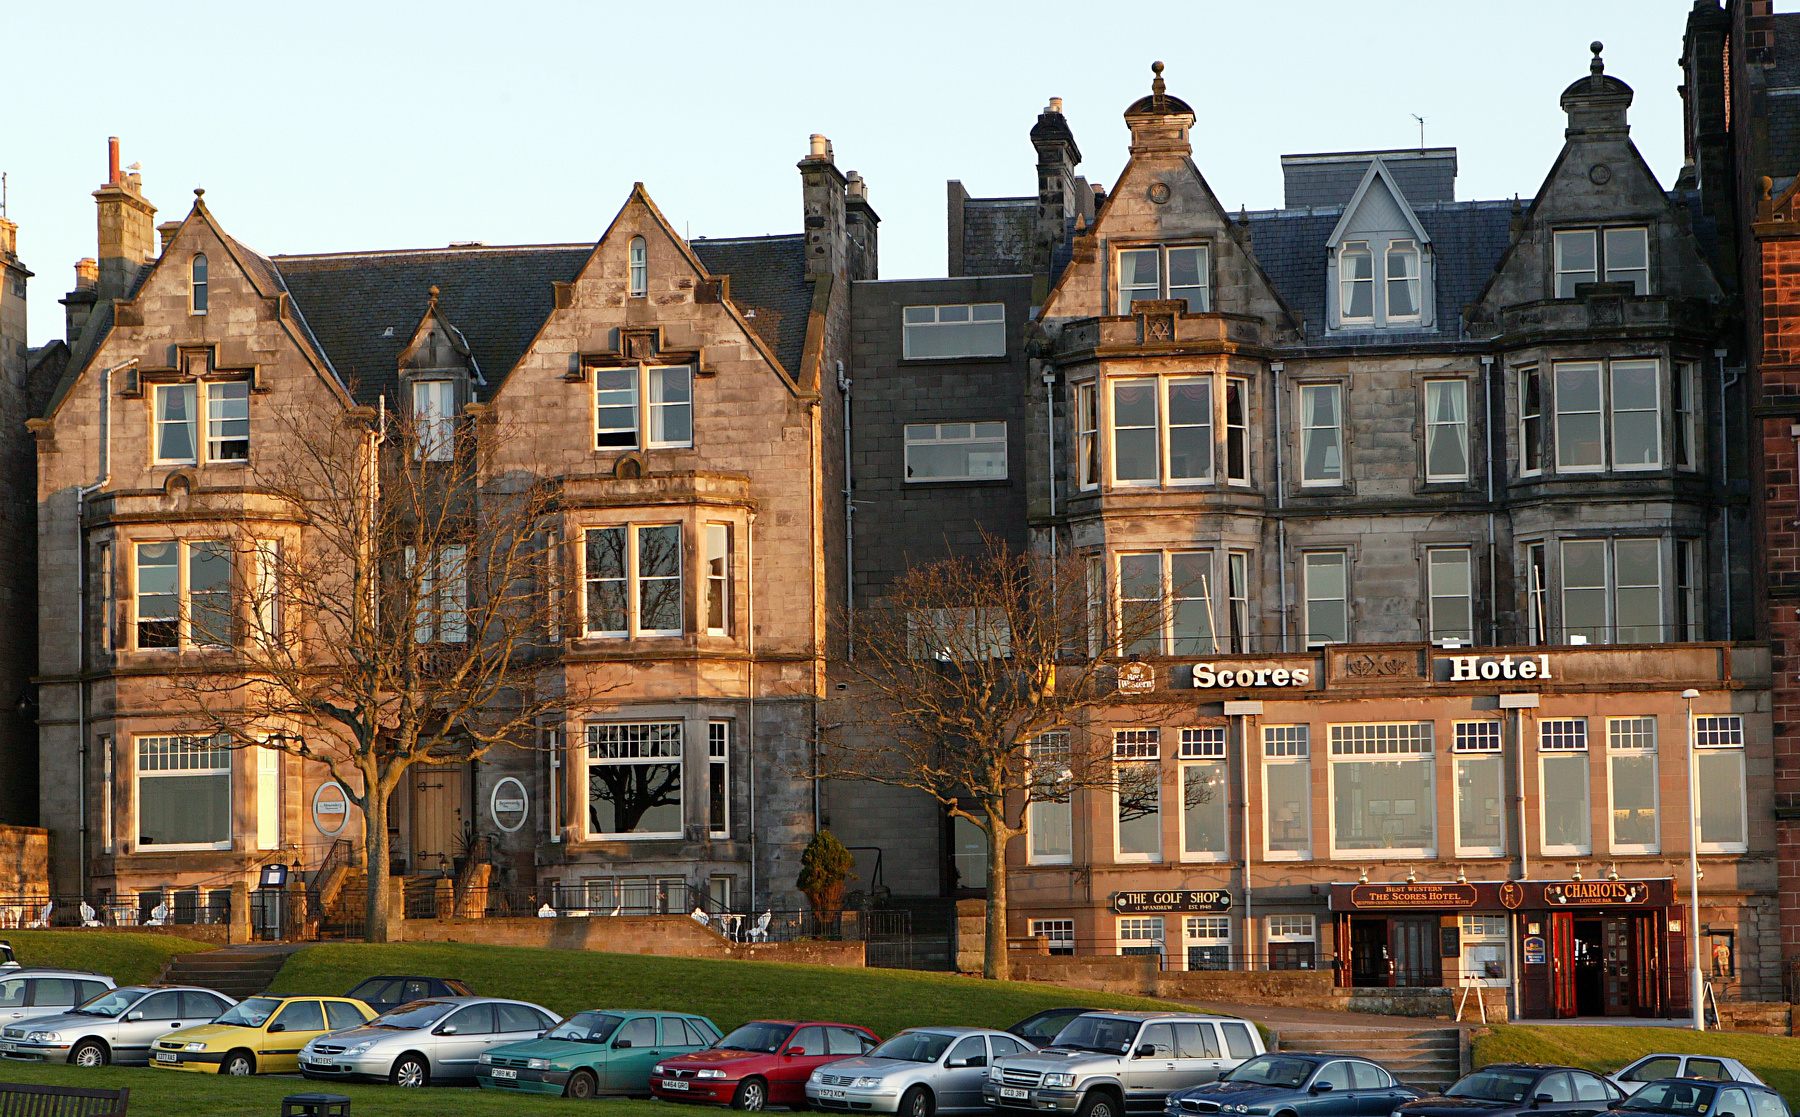 Scores Hotel, St Andrews